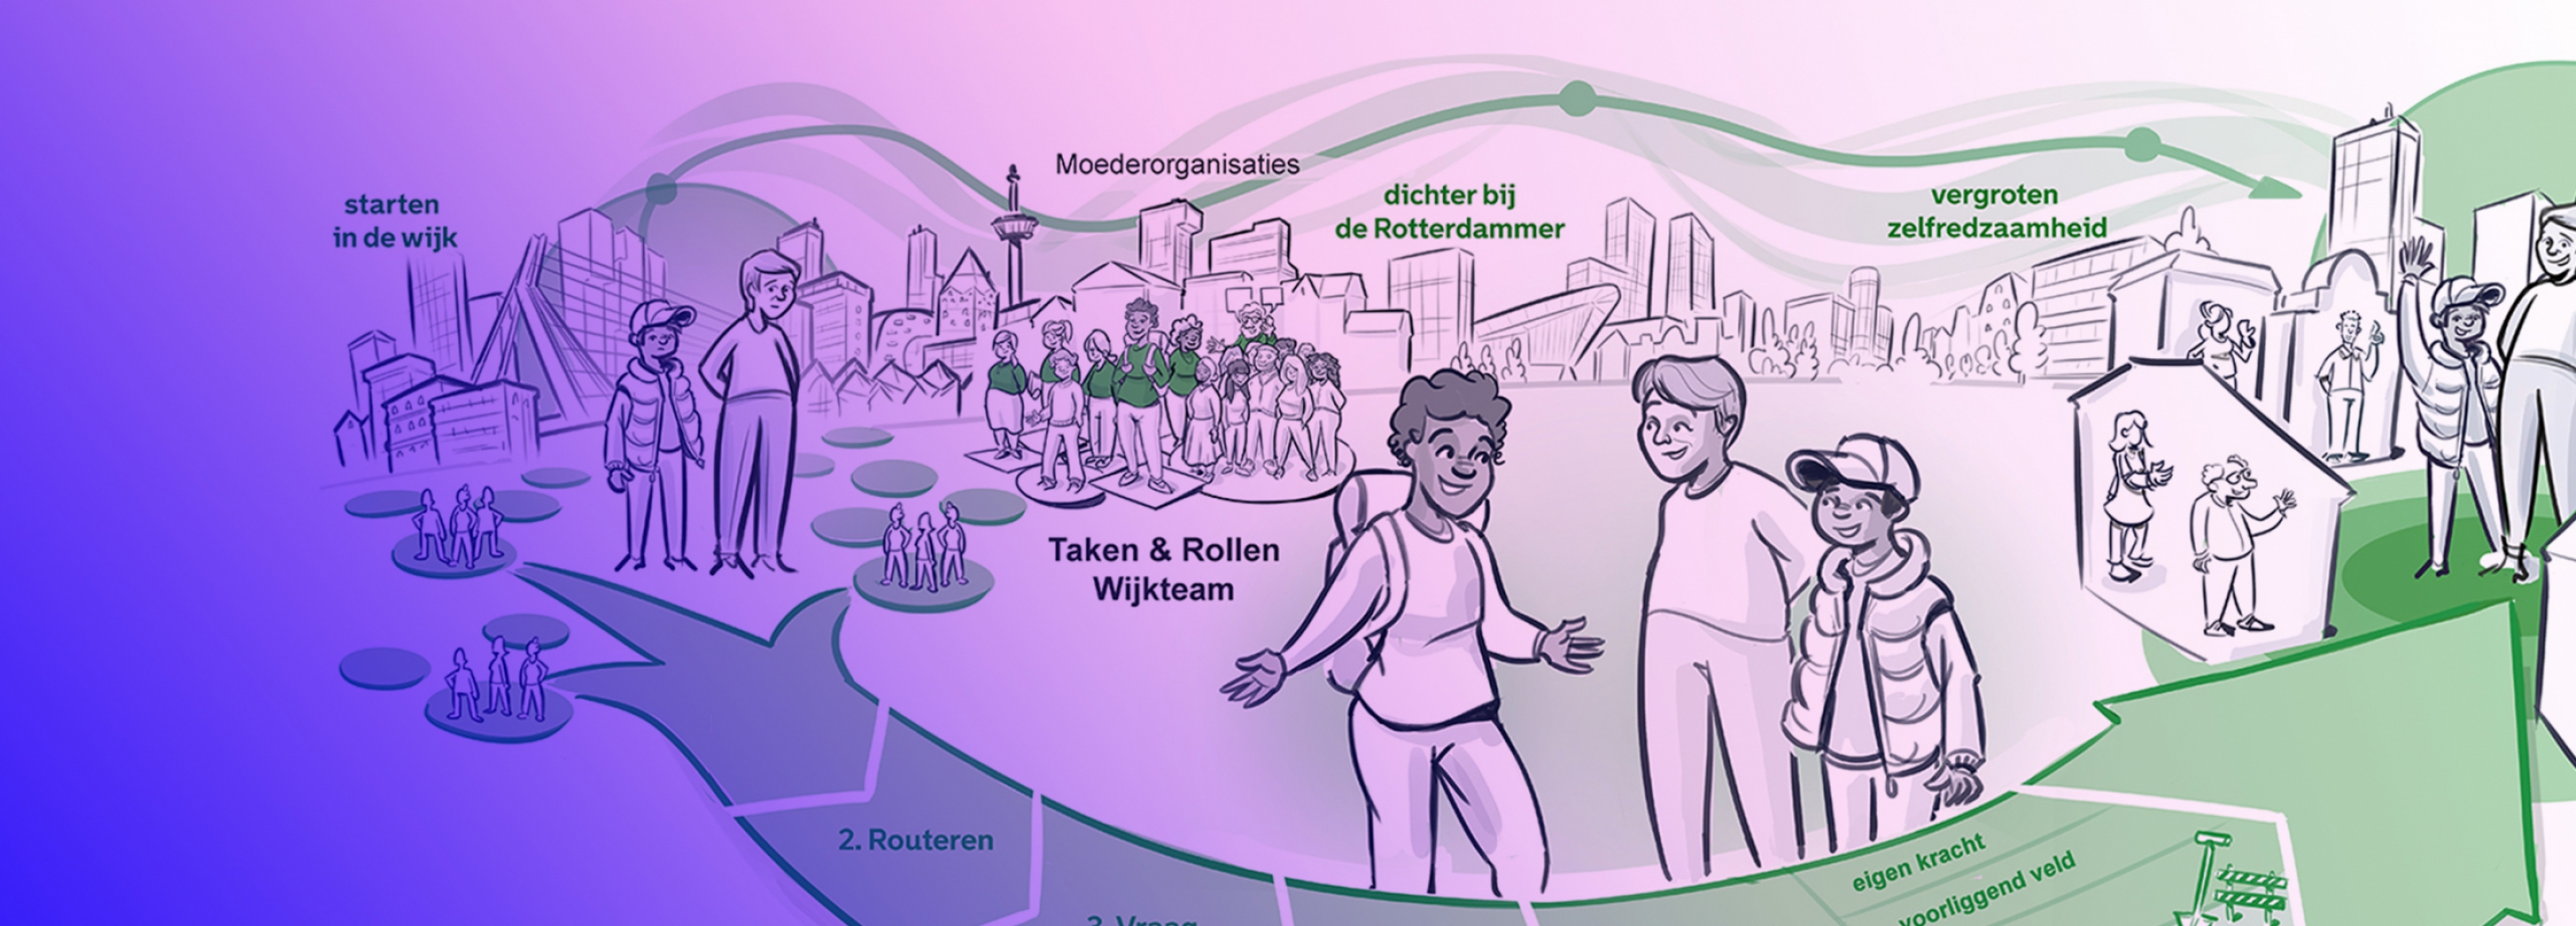 Social teams Rotterdam - Shared working method